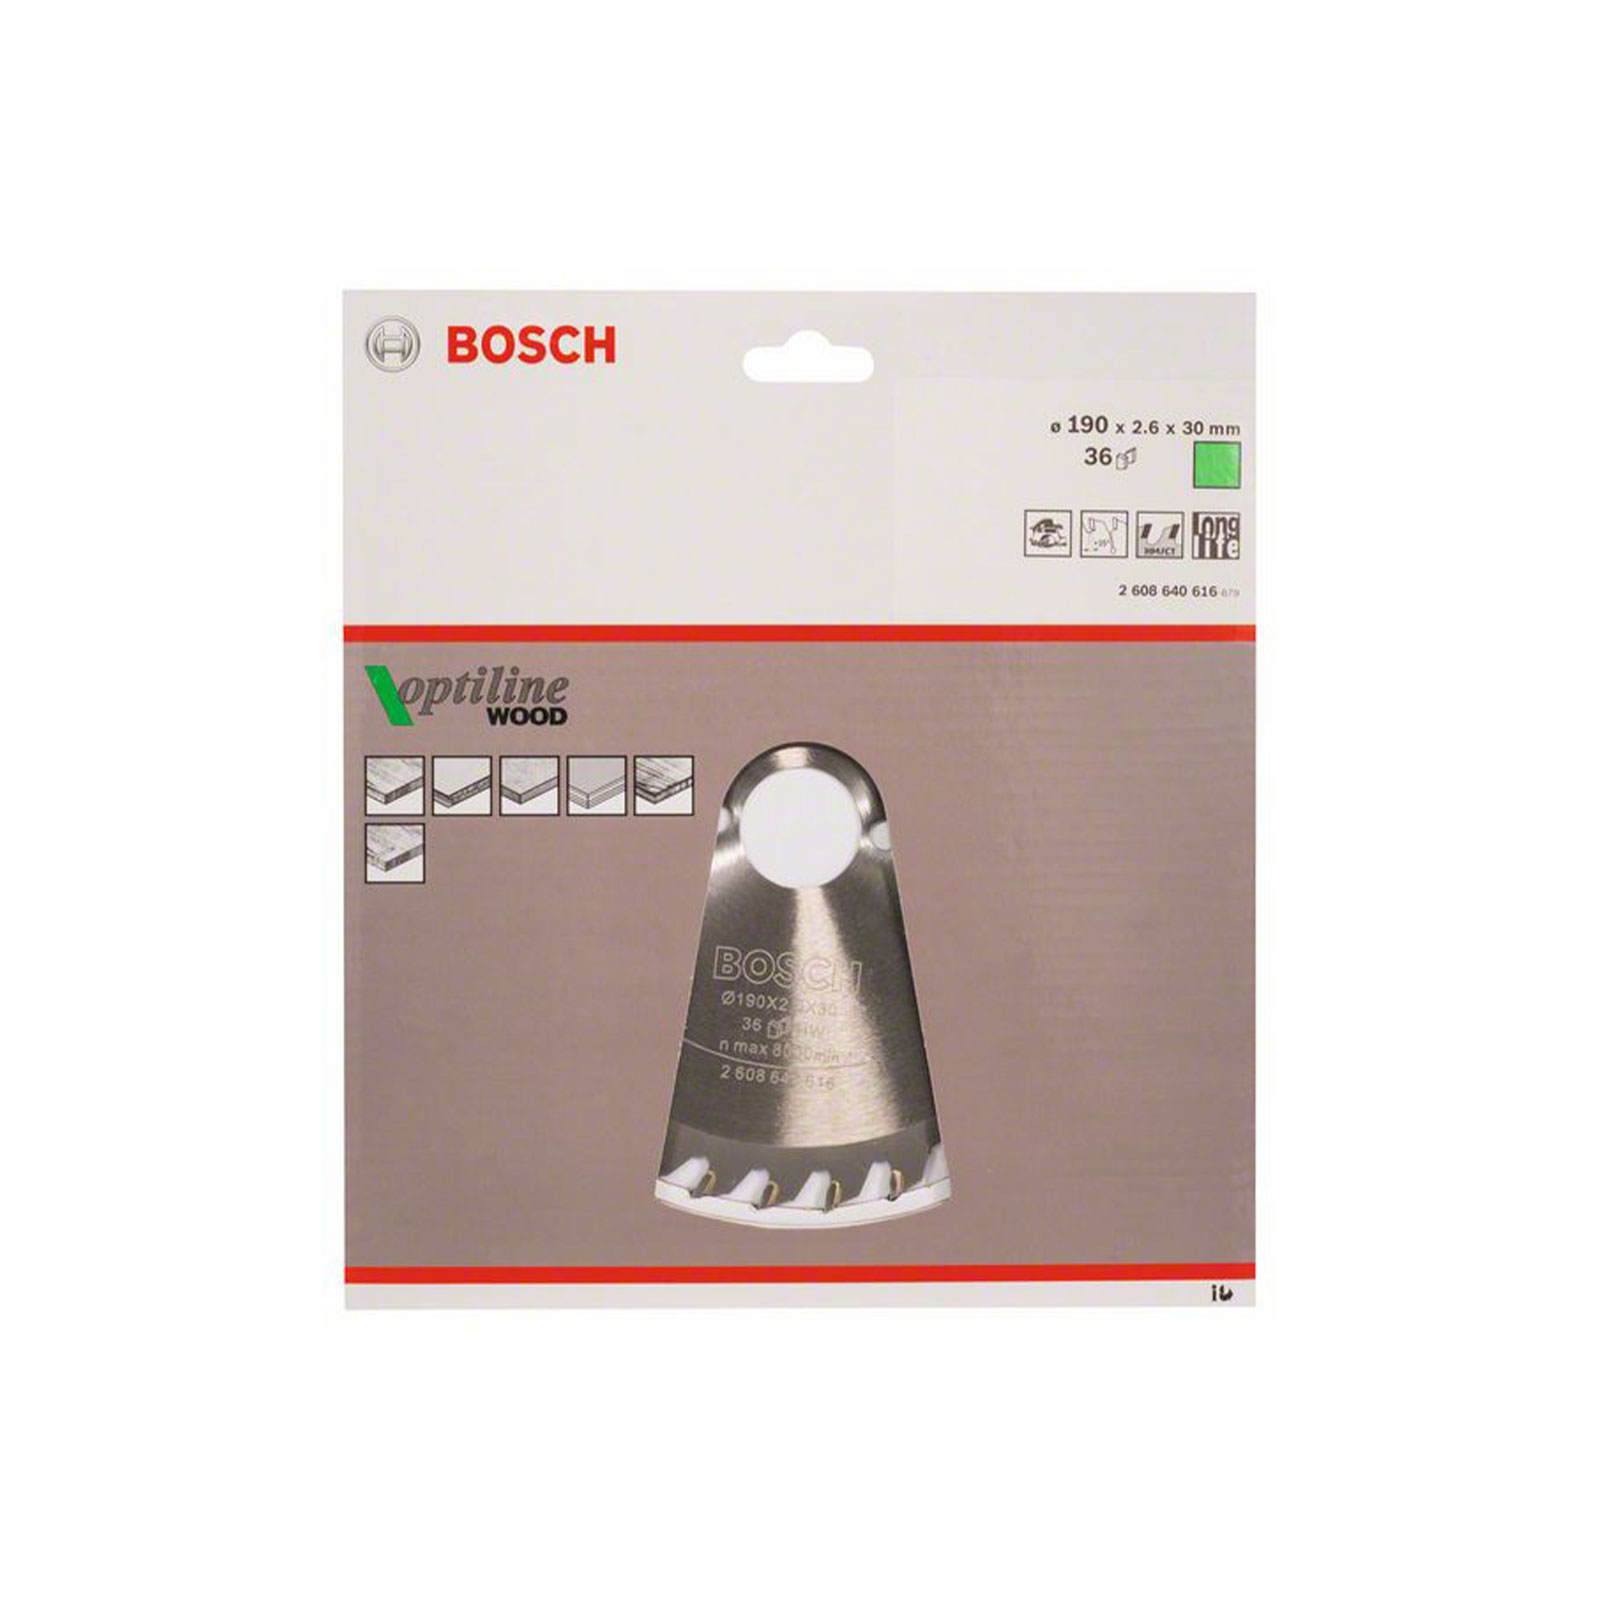 Bosch Professional Kreissaegeblatt Optiline Wood fuer Handkreissaegen, 190 x 30 x 2,6 mm, 36